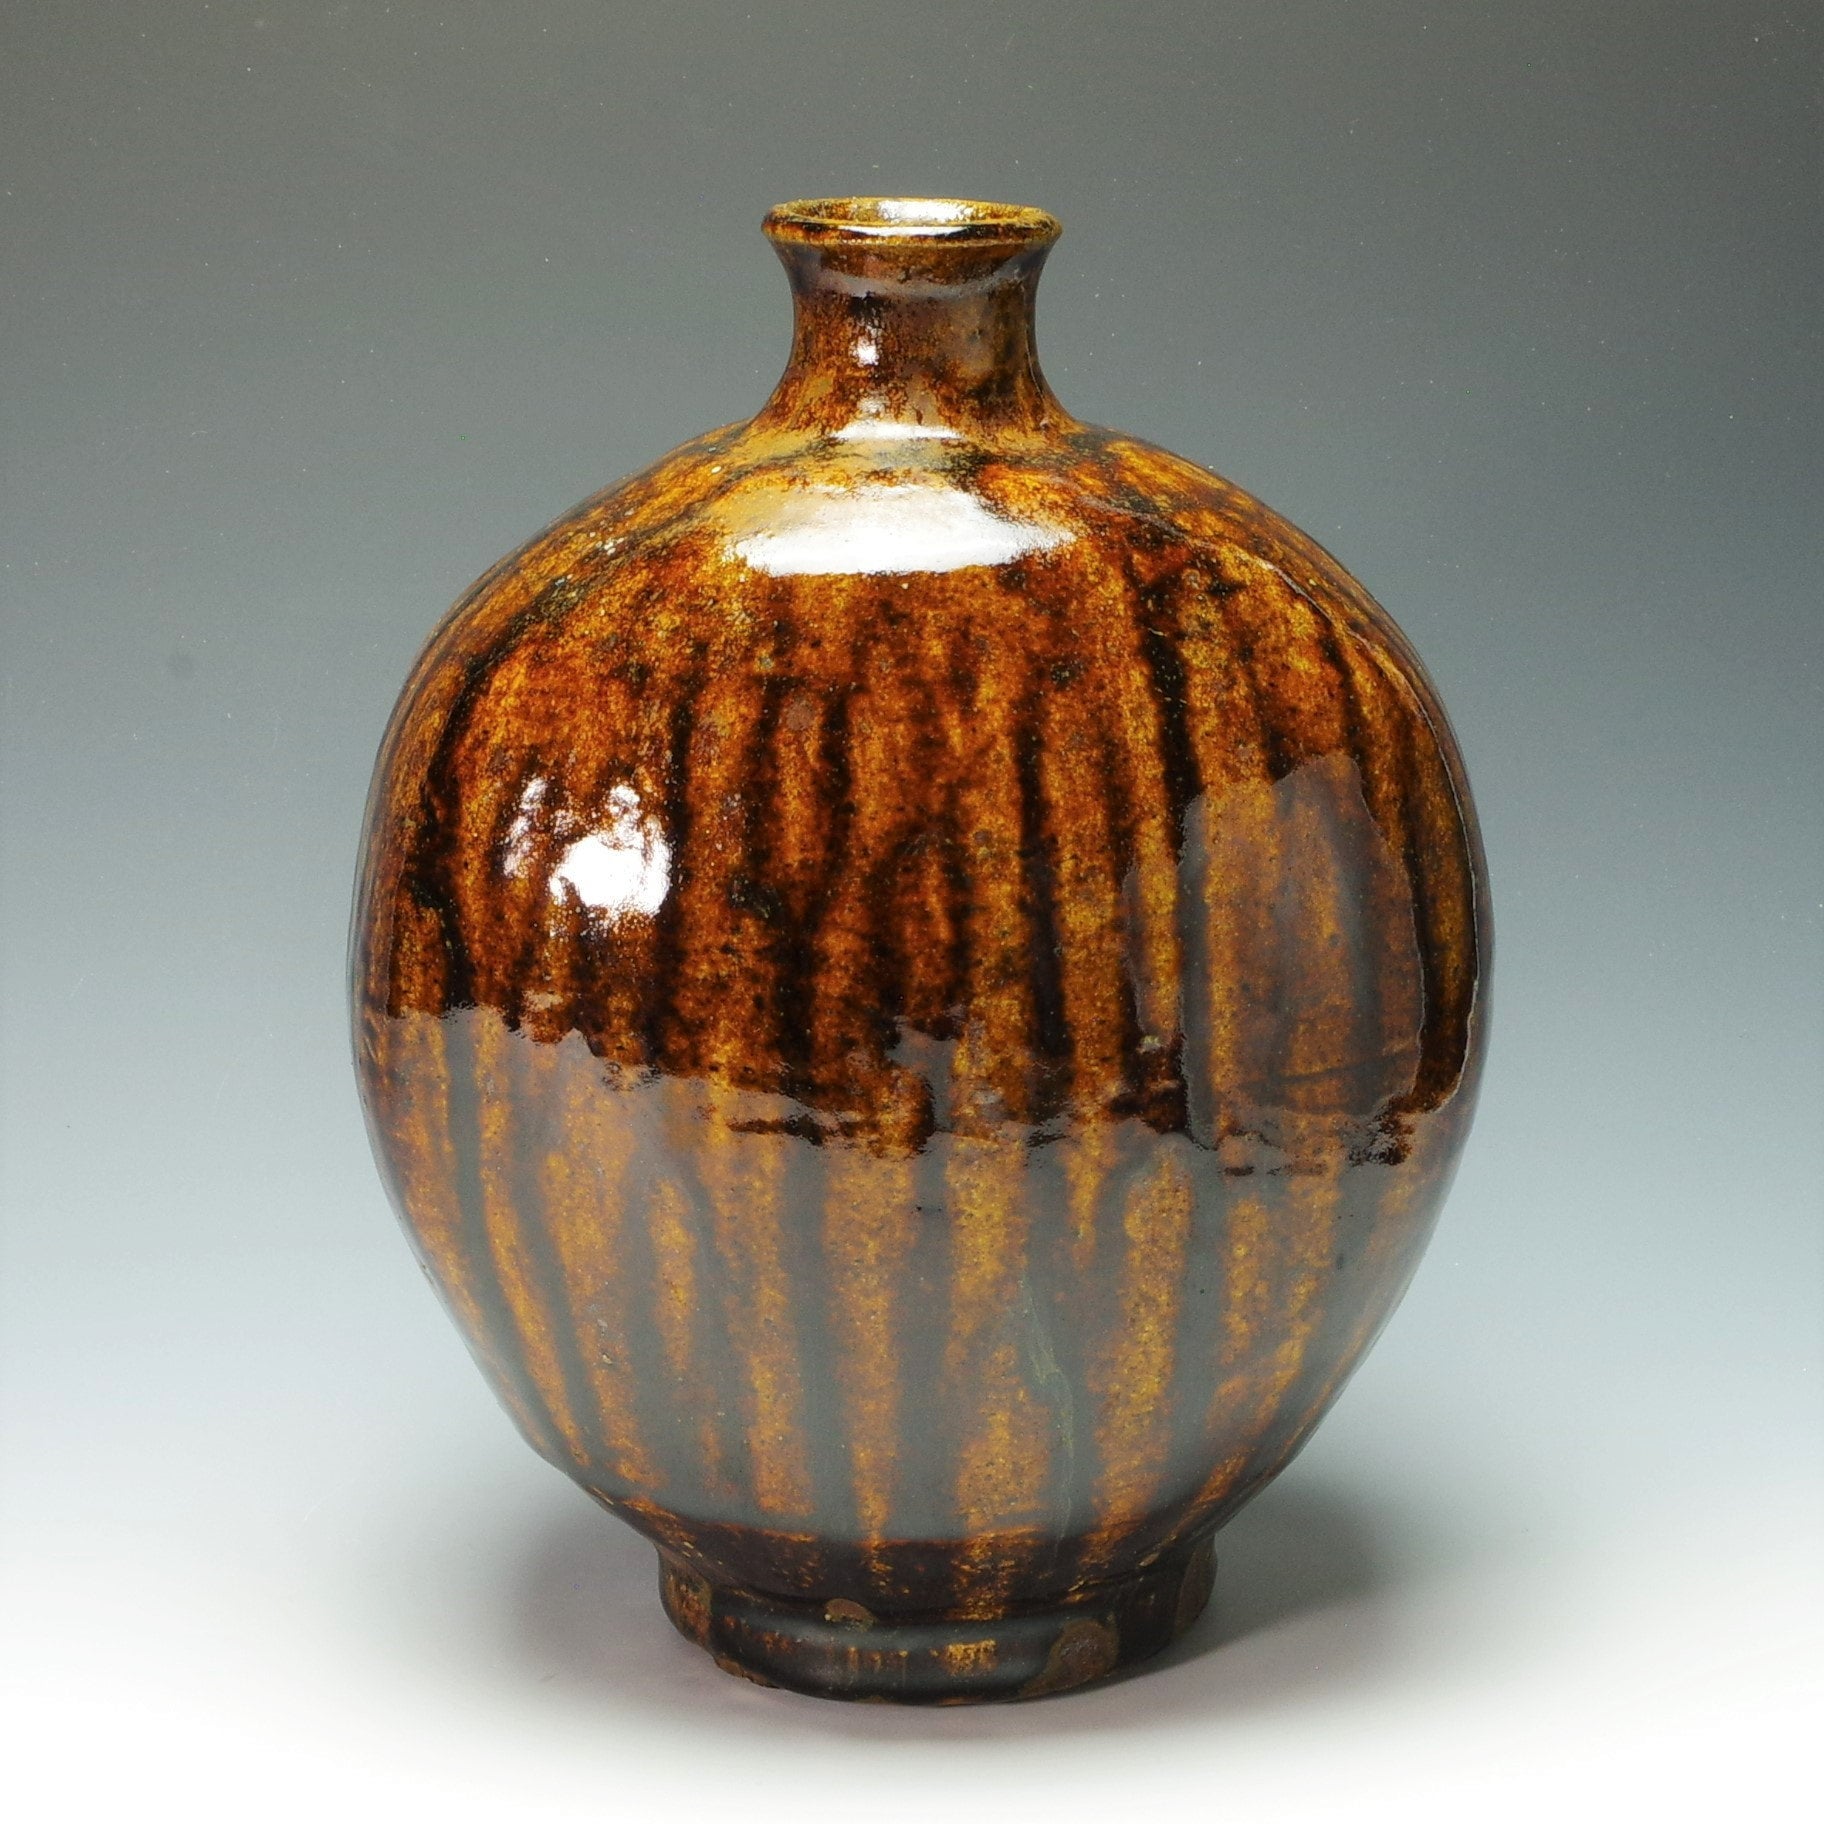 黒釉花生 / Vase, Black Glazed-